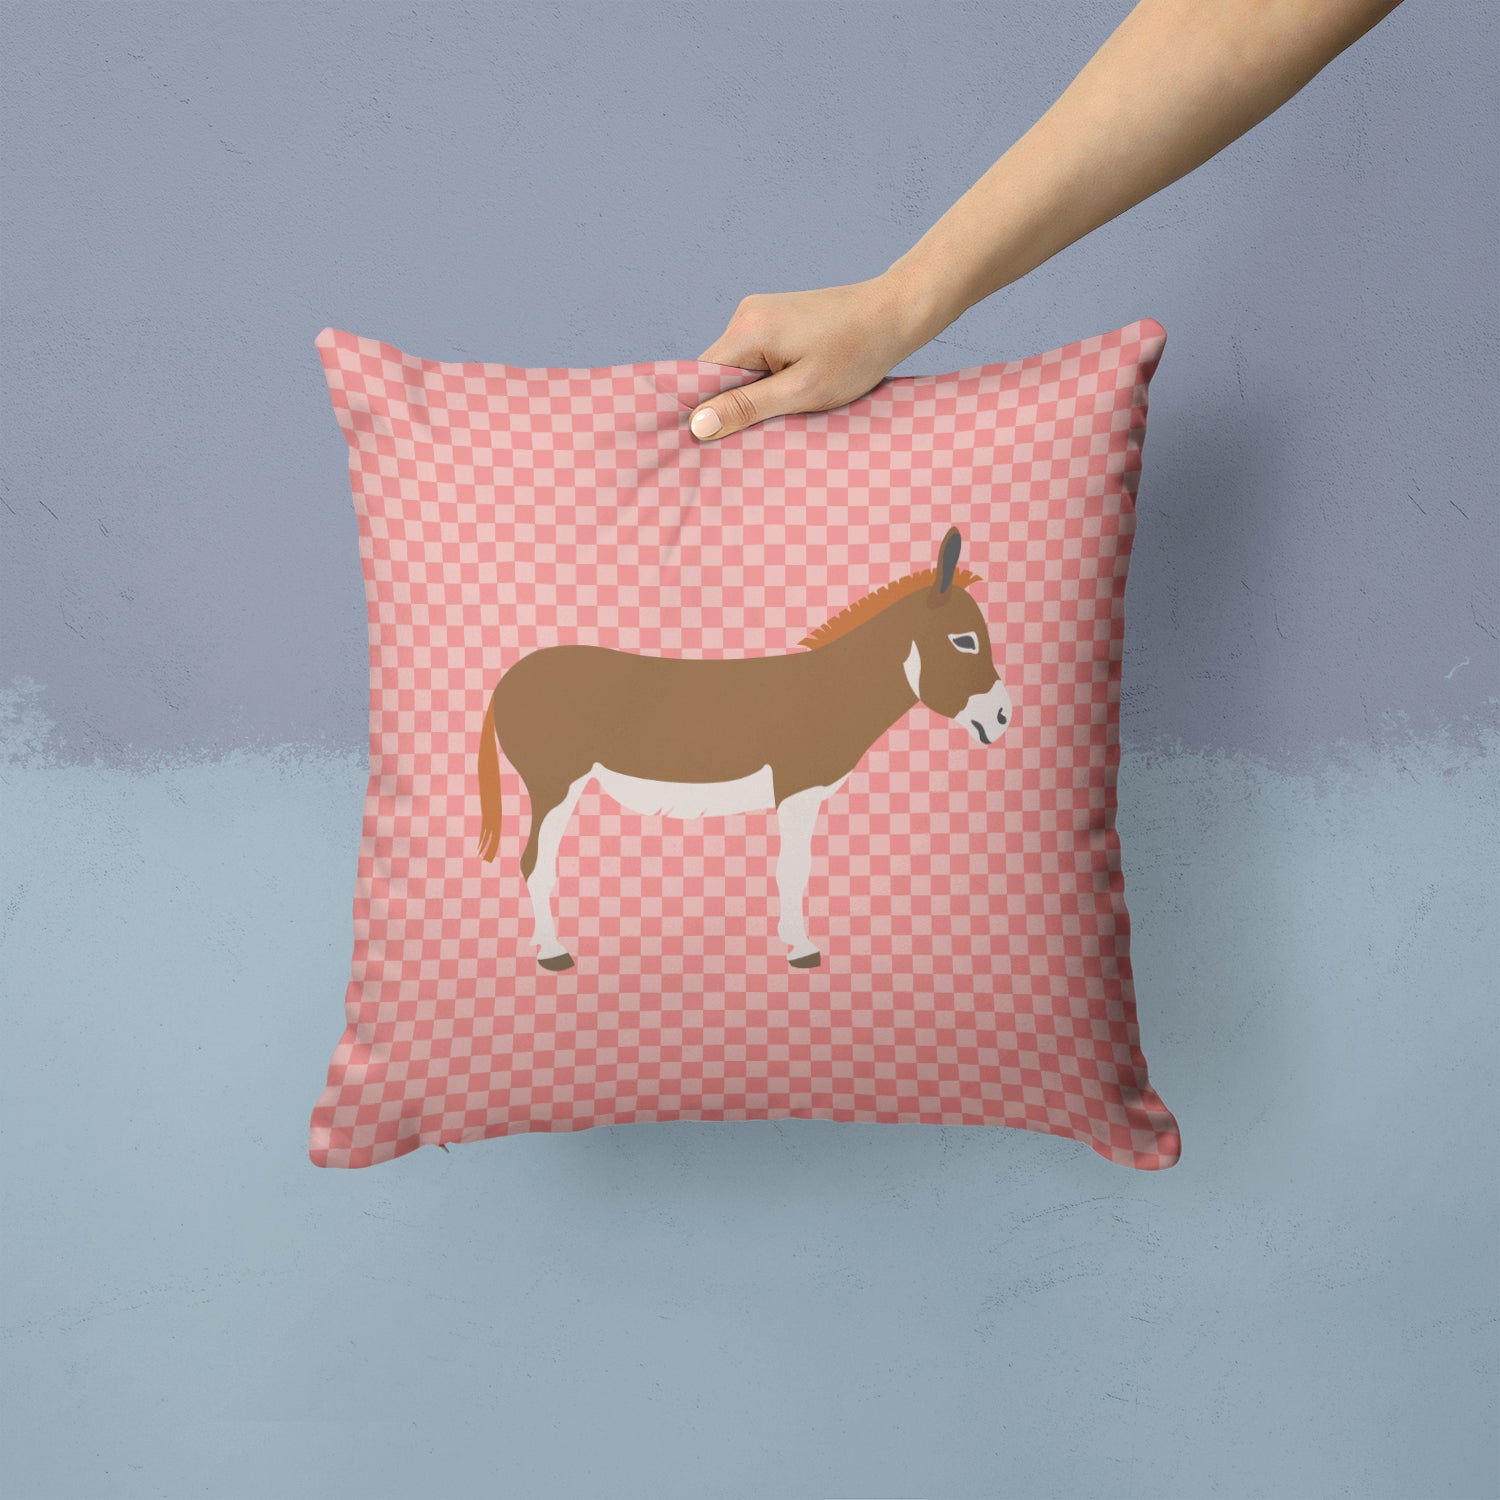 Miniature Mediterranian Donkey Pink Check Fabric Decorative Pillow BB7847PW1414 - the-store.com